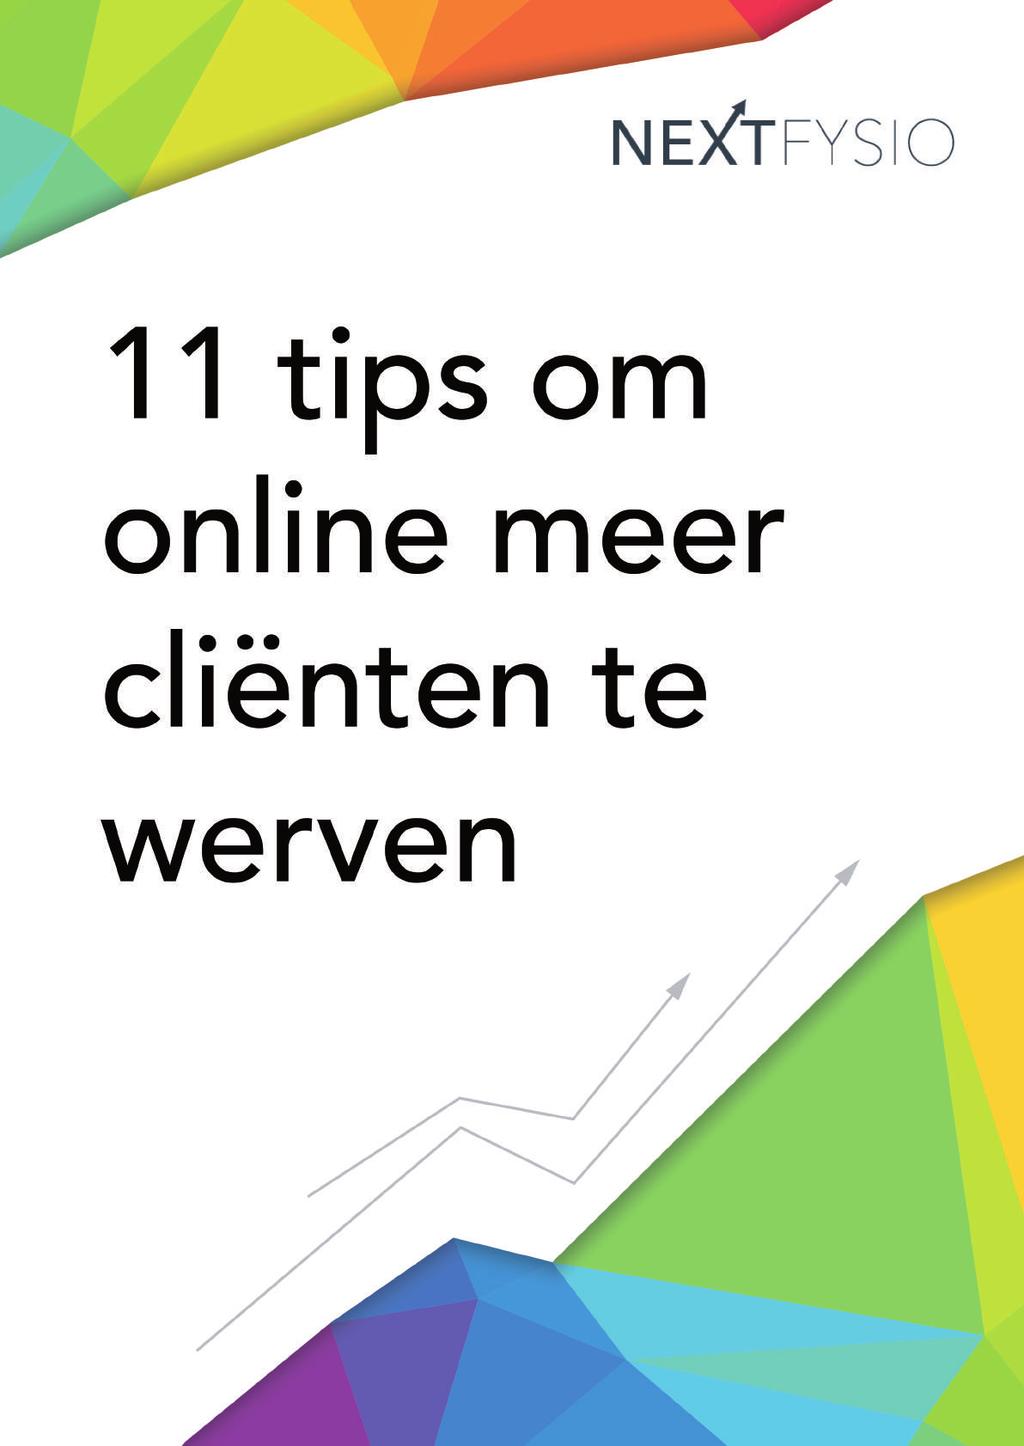 9 tips om online